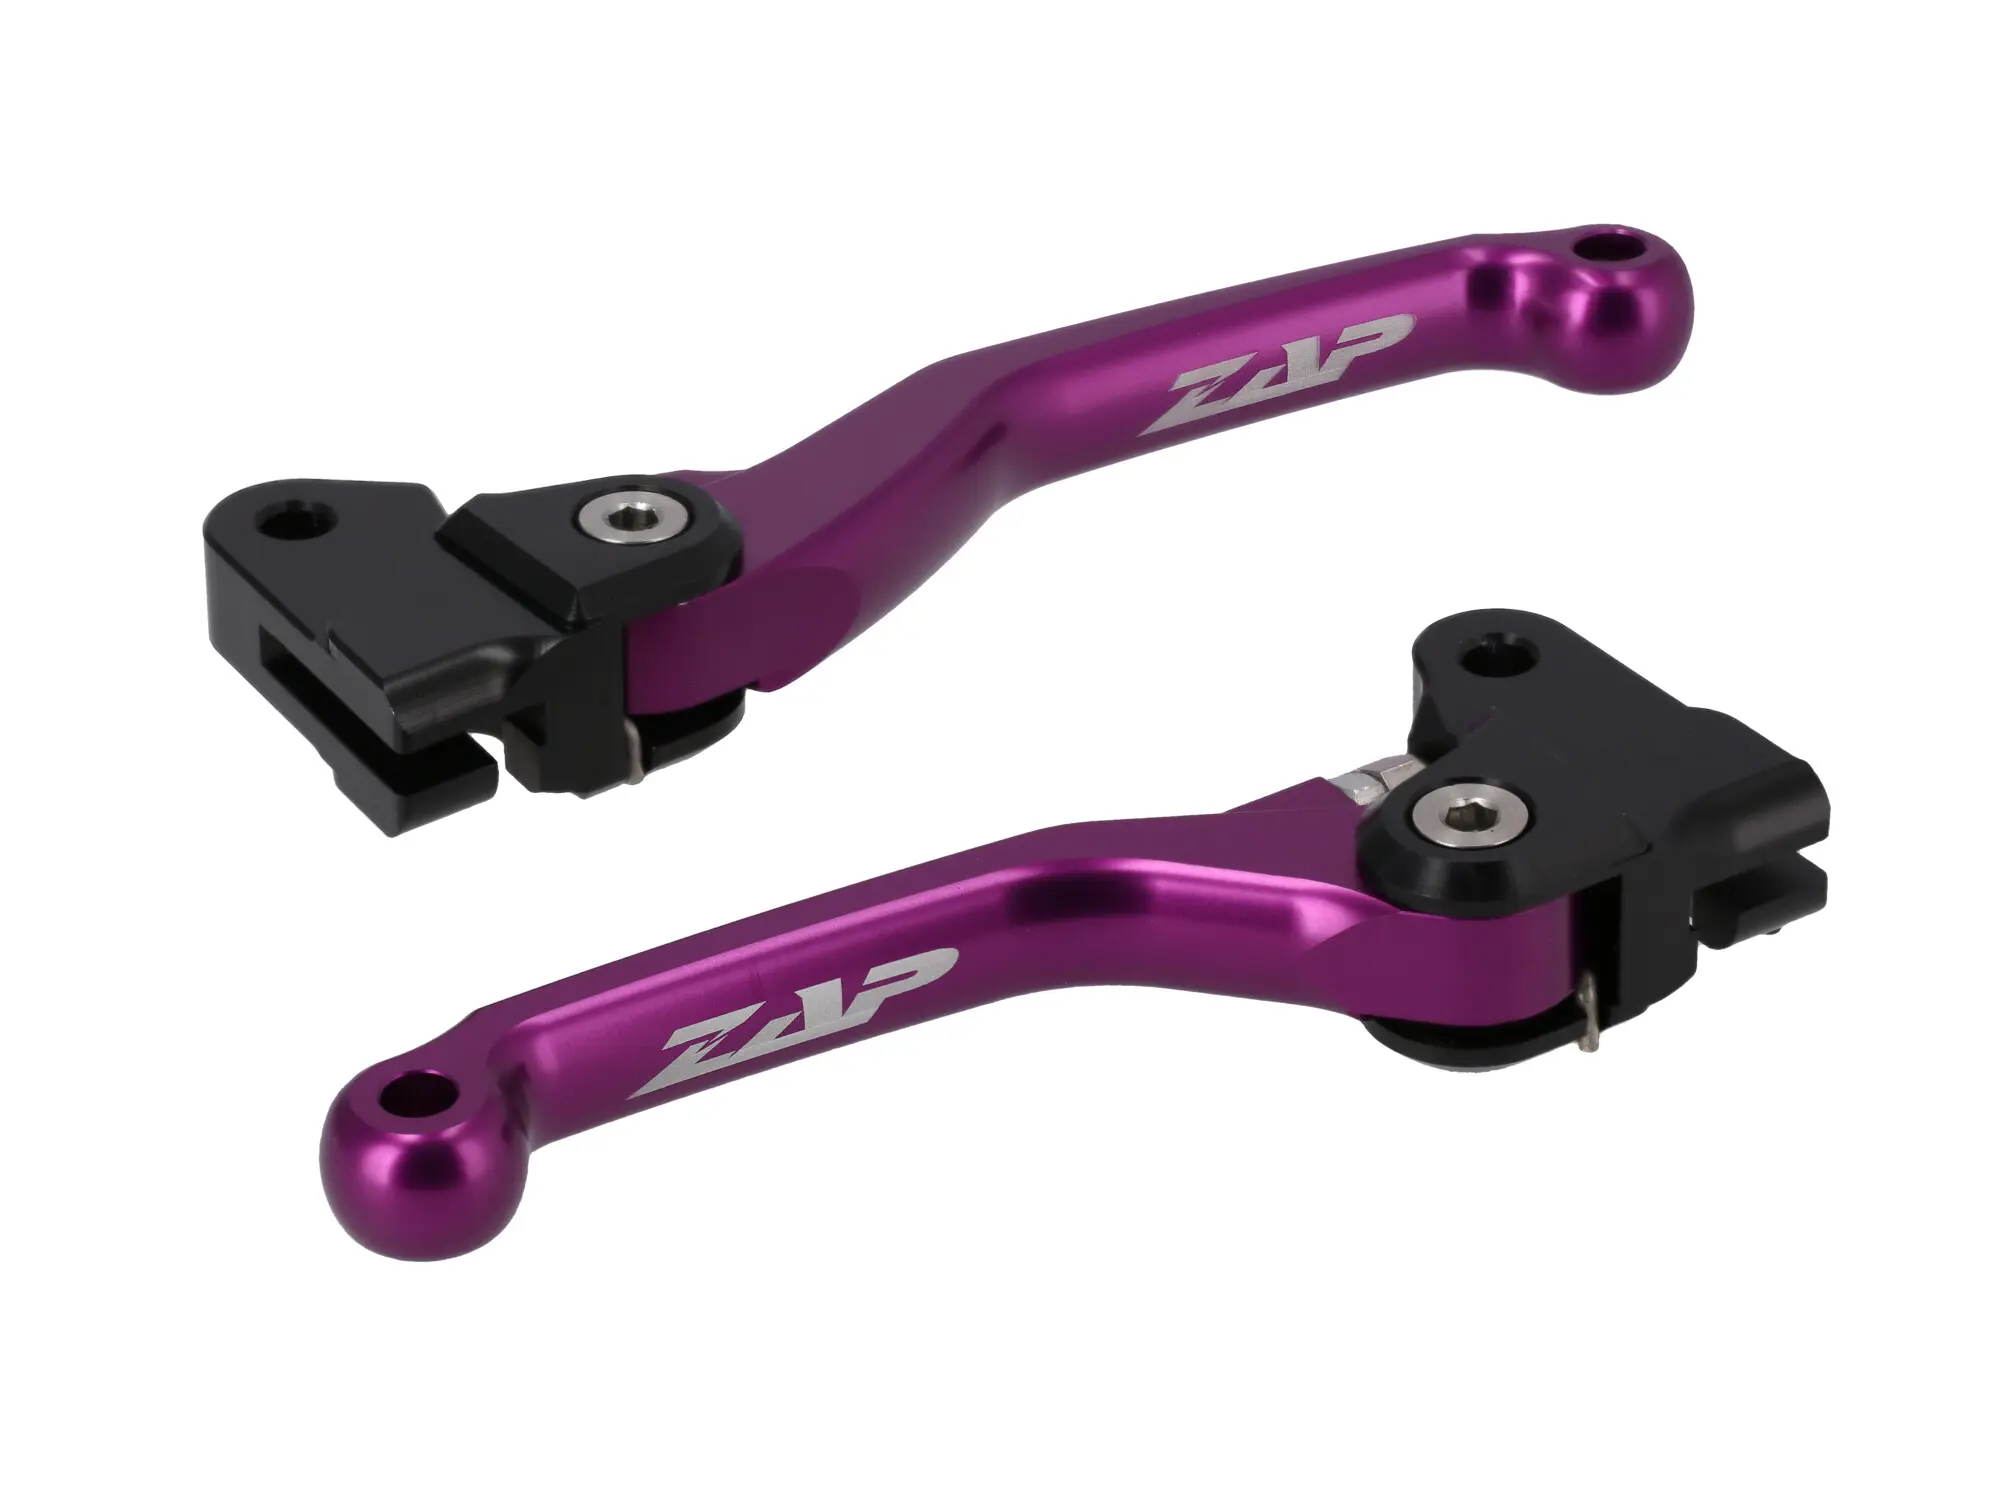 ZAP Competition Lever Set for Simson Purple, Item no: 10072980 - Image 1